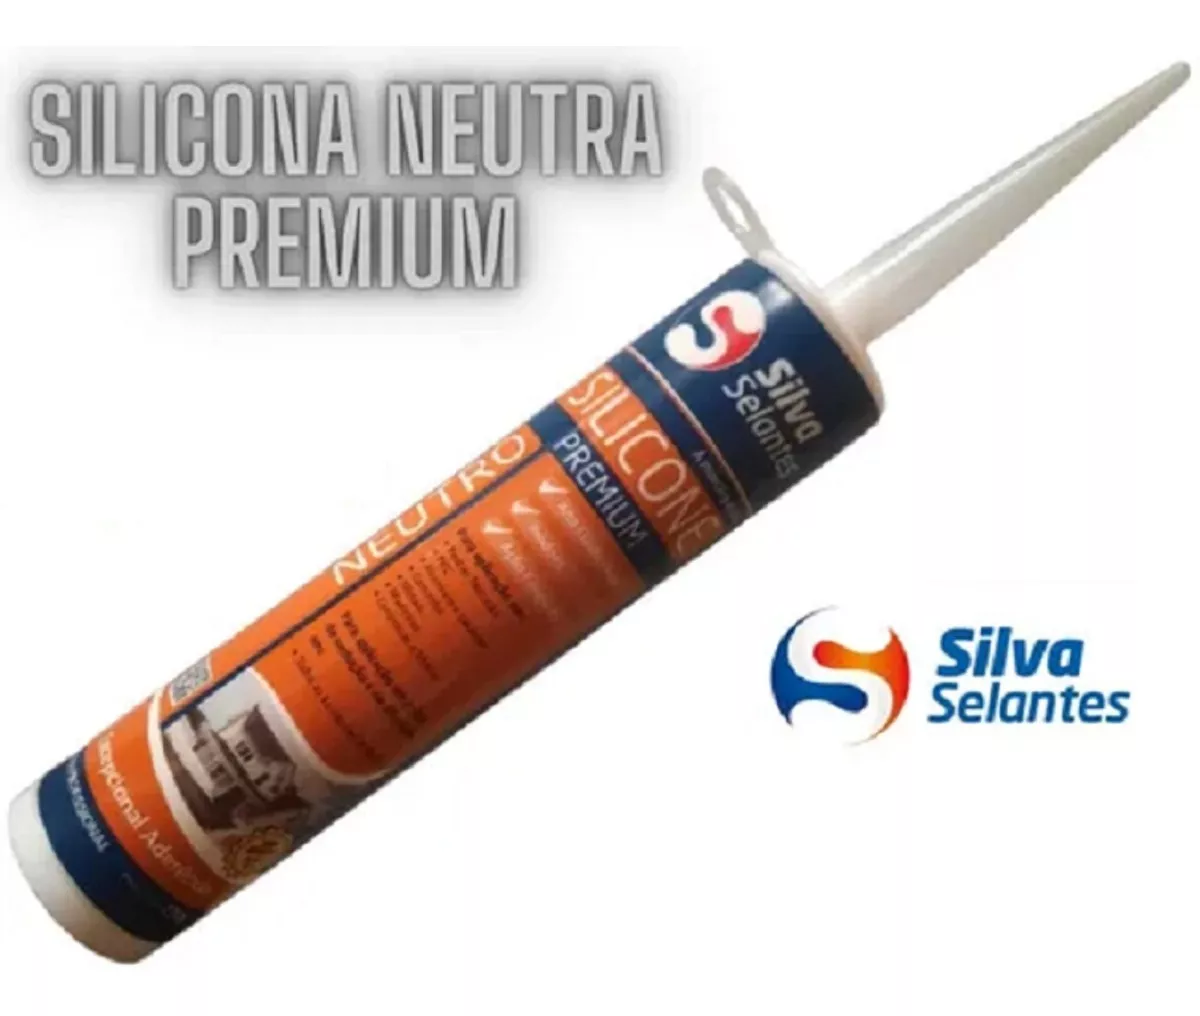 Silicona Neutra Premium Blanca Techos Isopanel 270g - Tyt